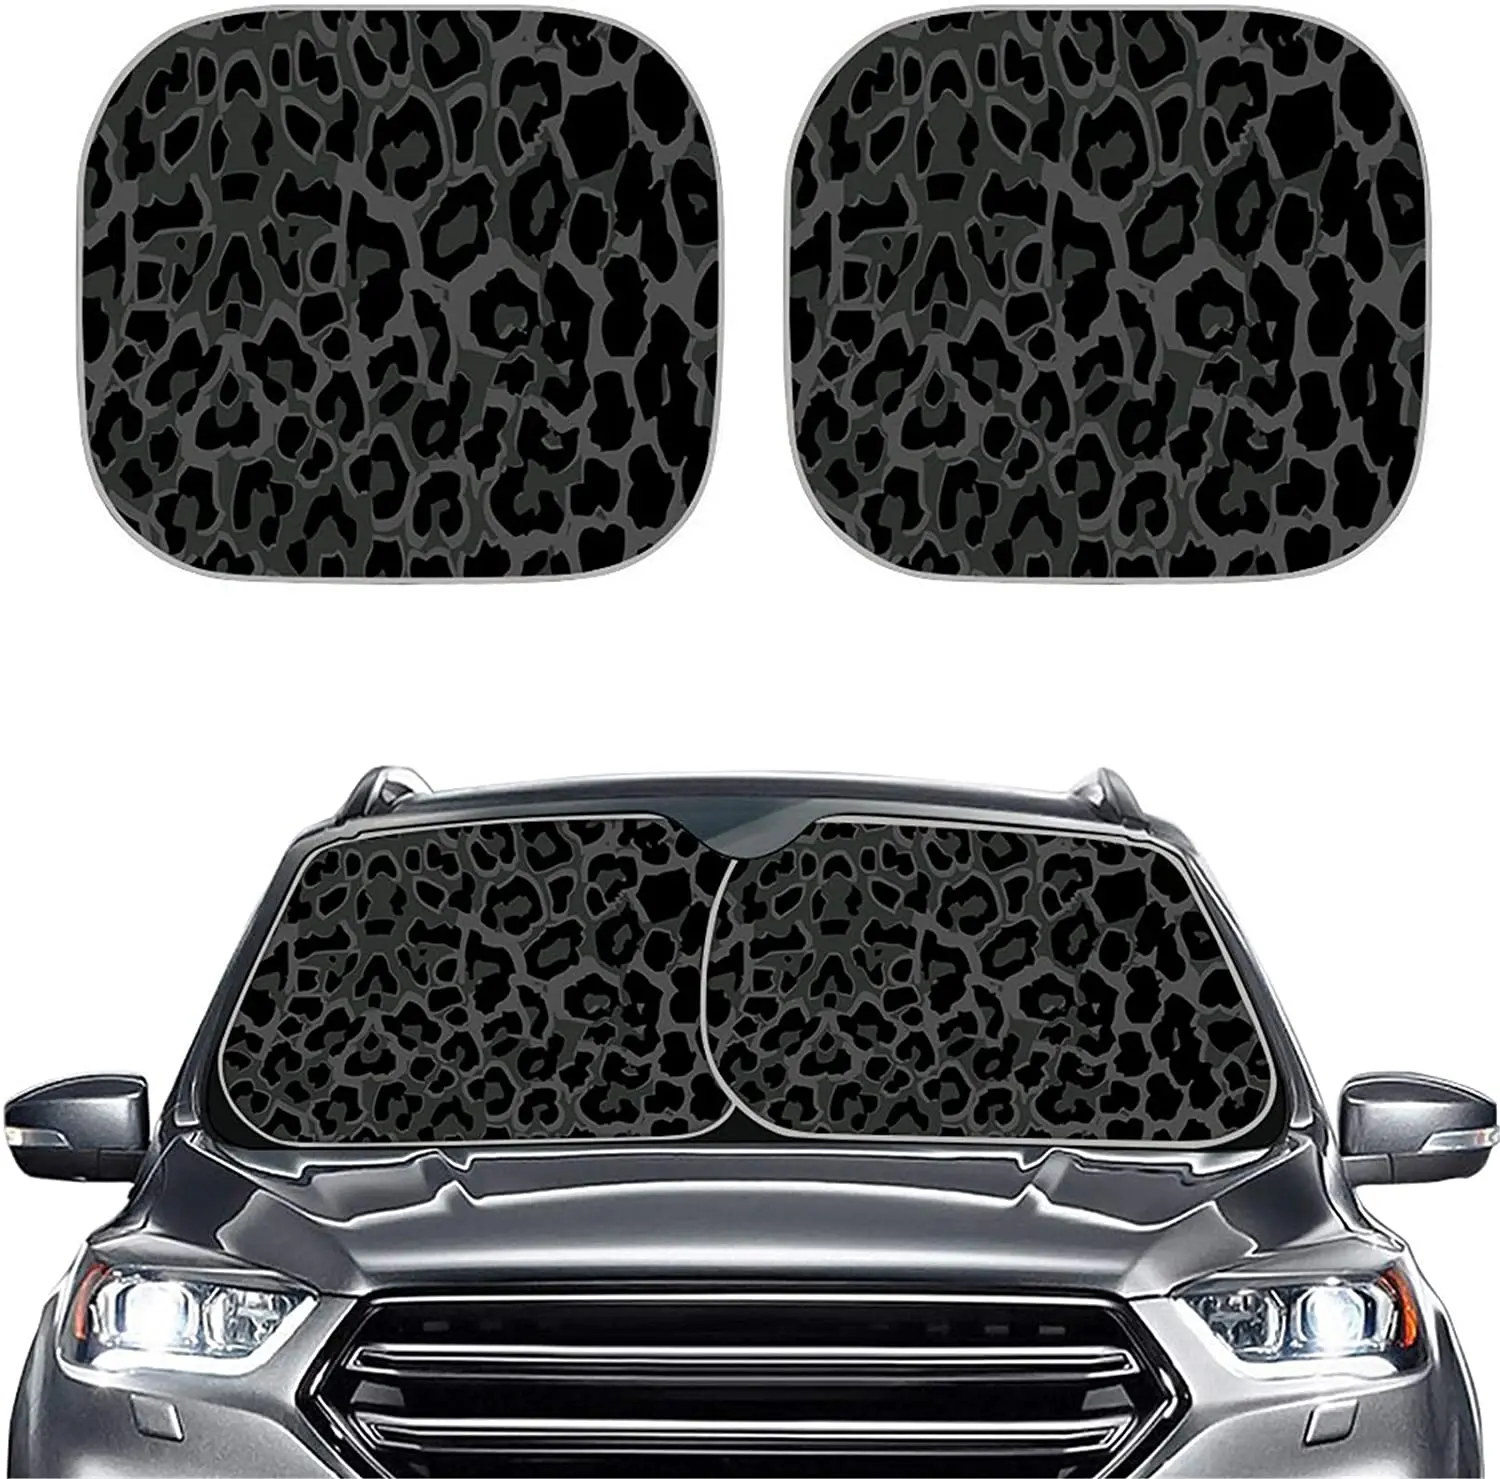 

FUSURIRE Black Leopard Print Car Sun Shade Universal Vehicles Portable Window Sun Visor Protector 2 Pieces Set Black Leopard Pat